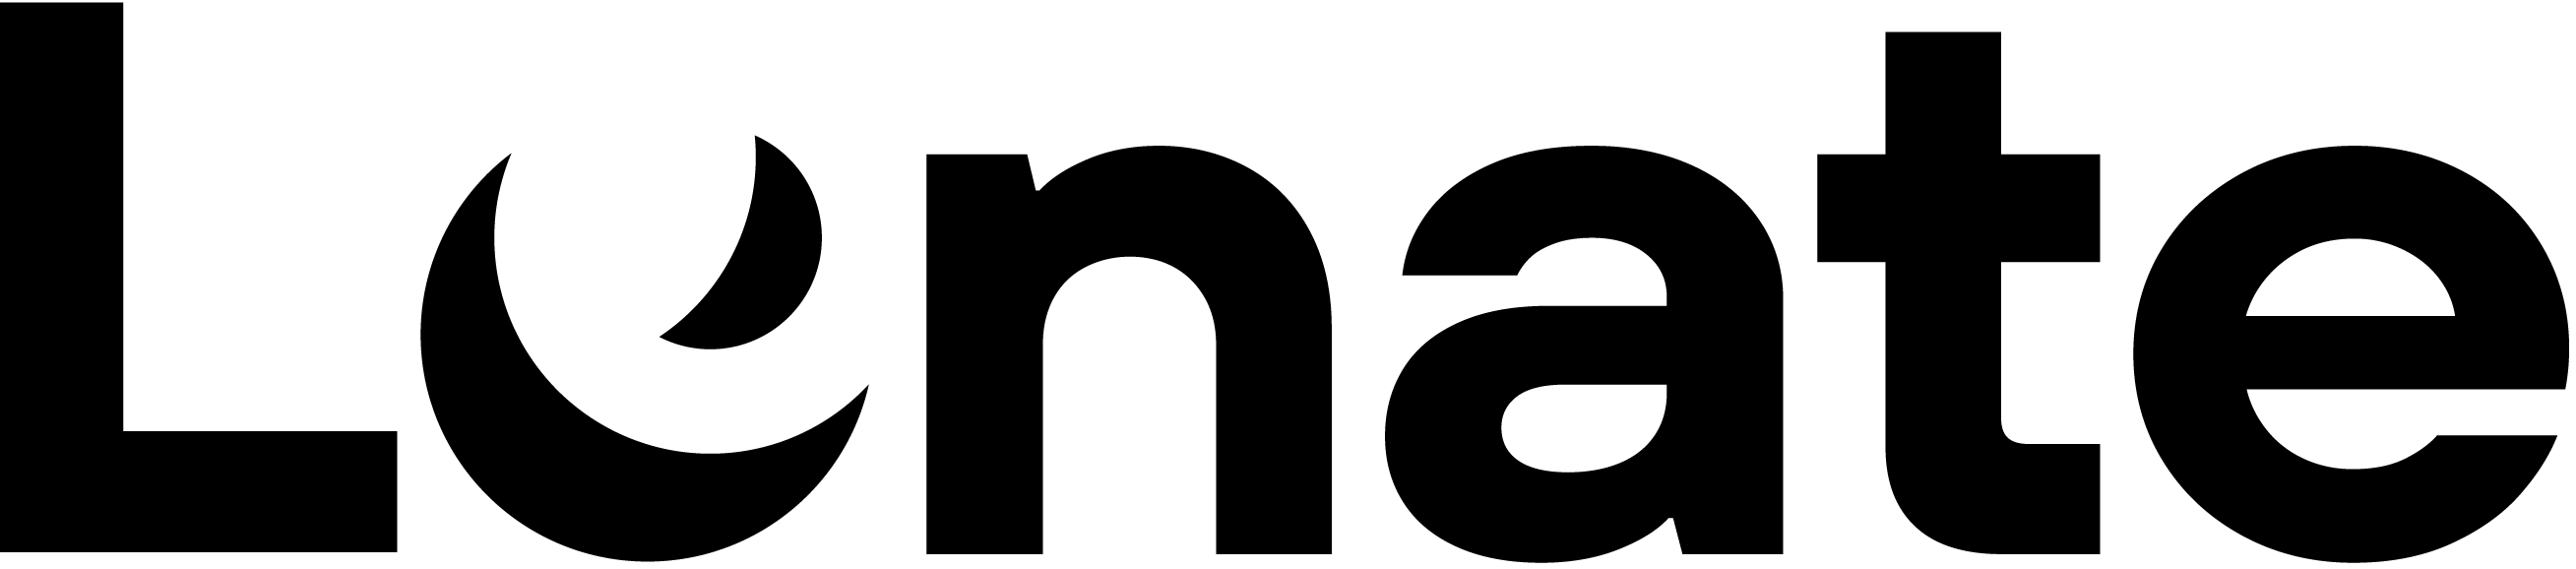 Lonate Brand Logo Image